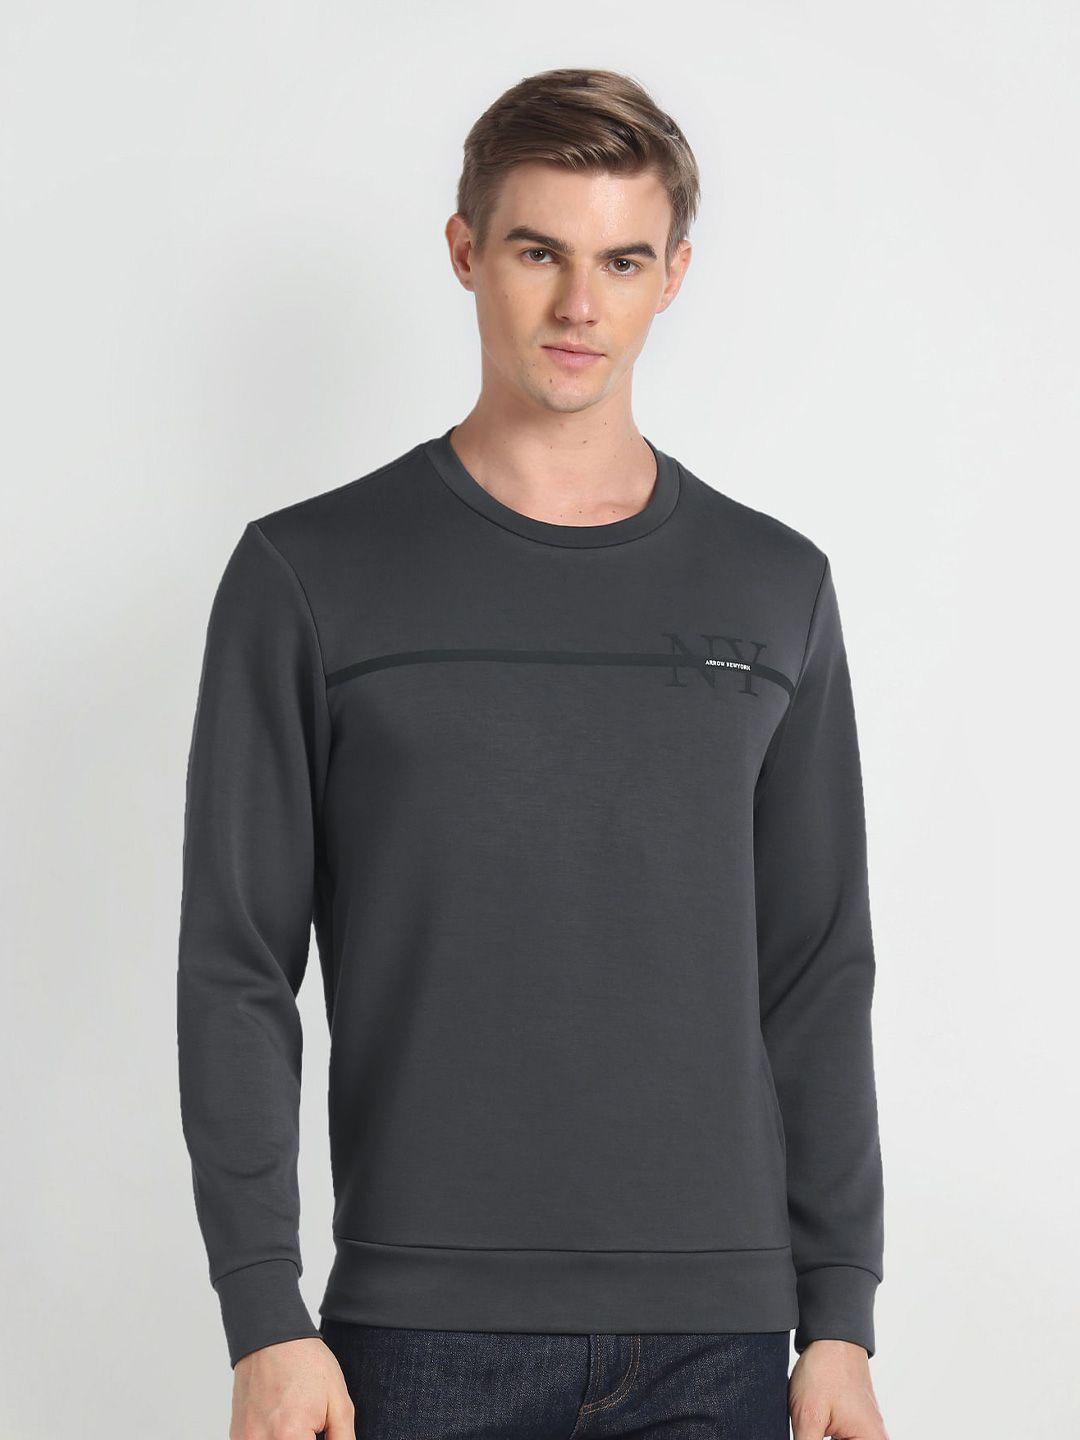 arrow-new-york-round-neck-long-sleeved-pullover-sweatshirt